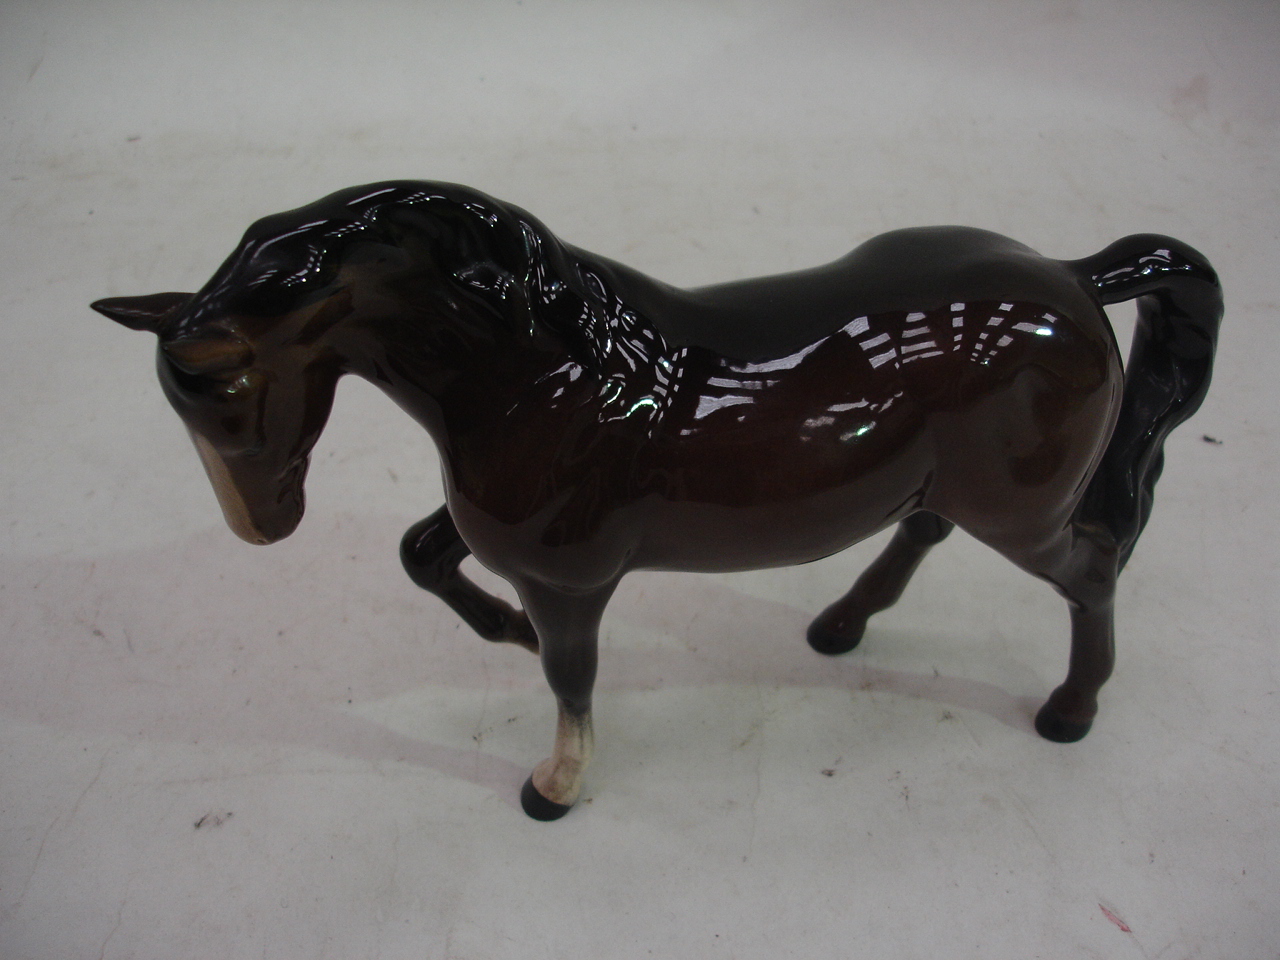 A Beswick gloss glaze horse, 6" high